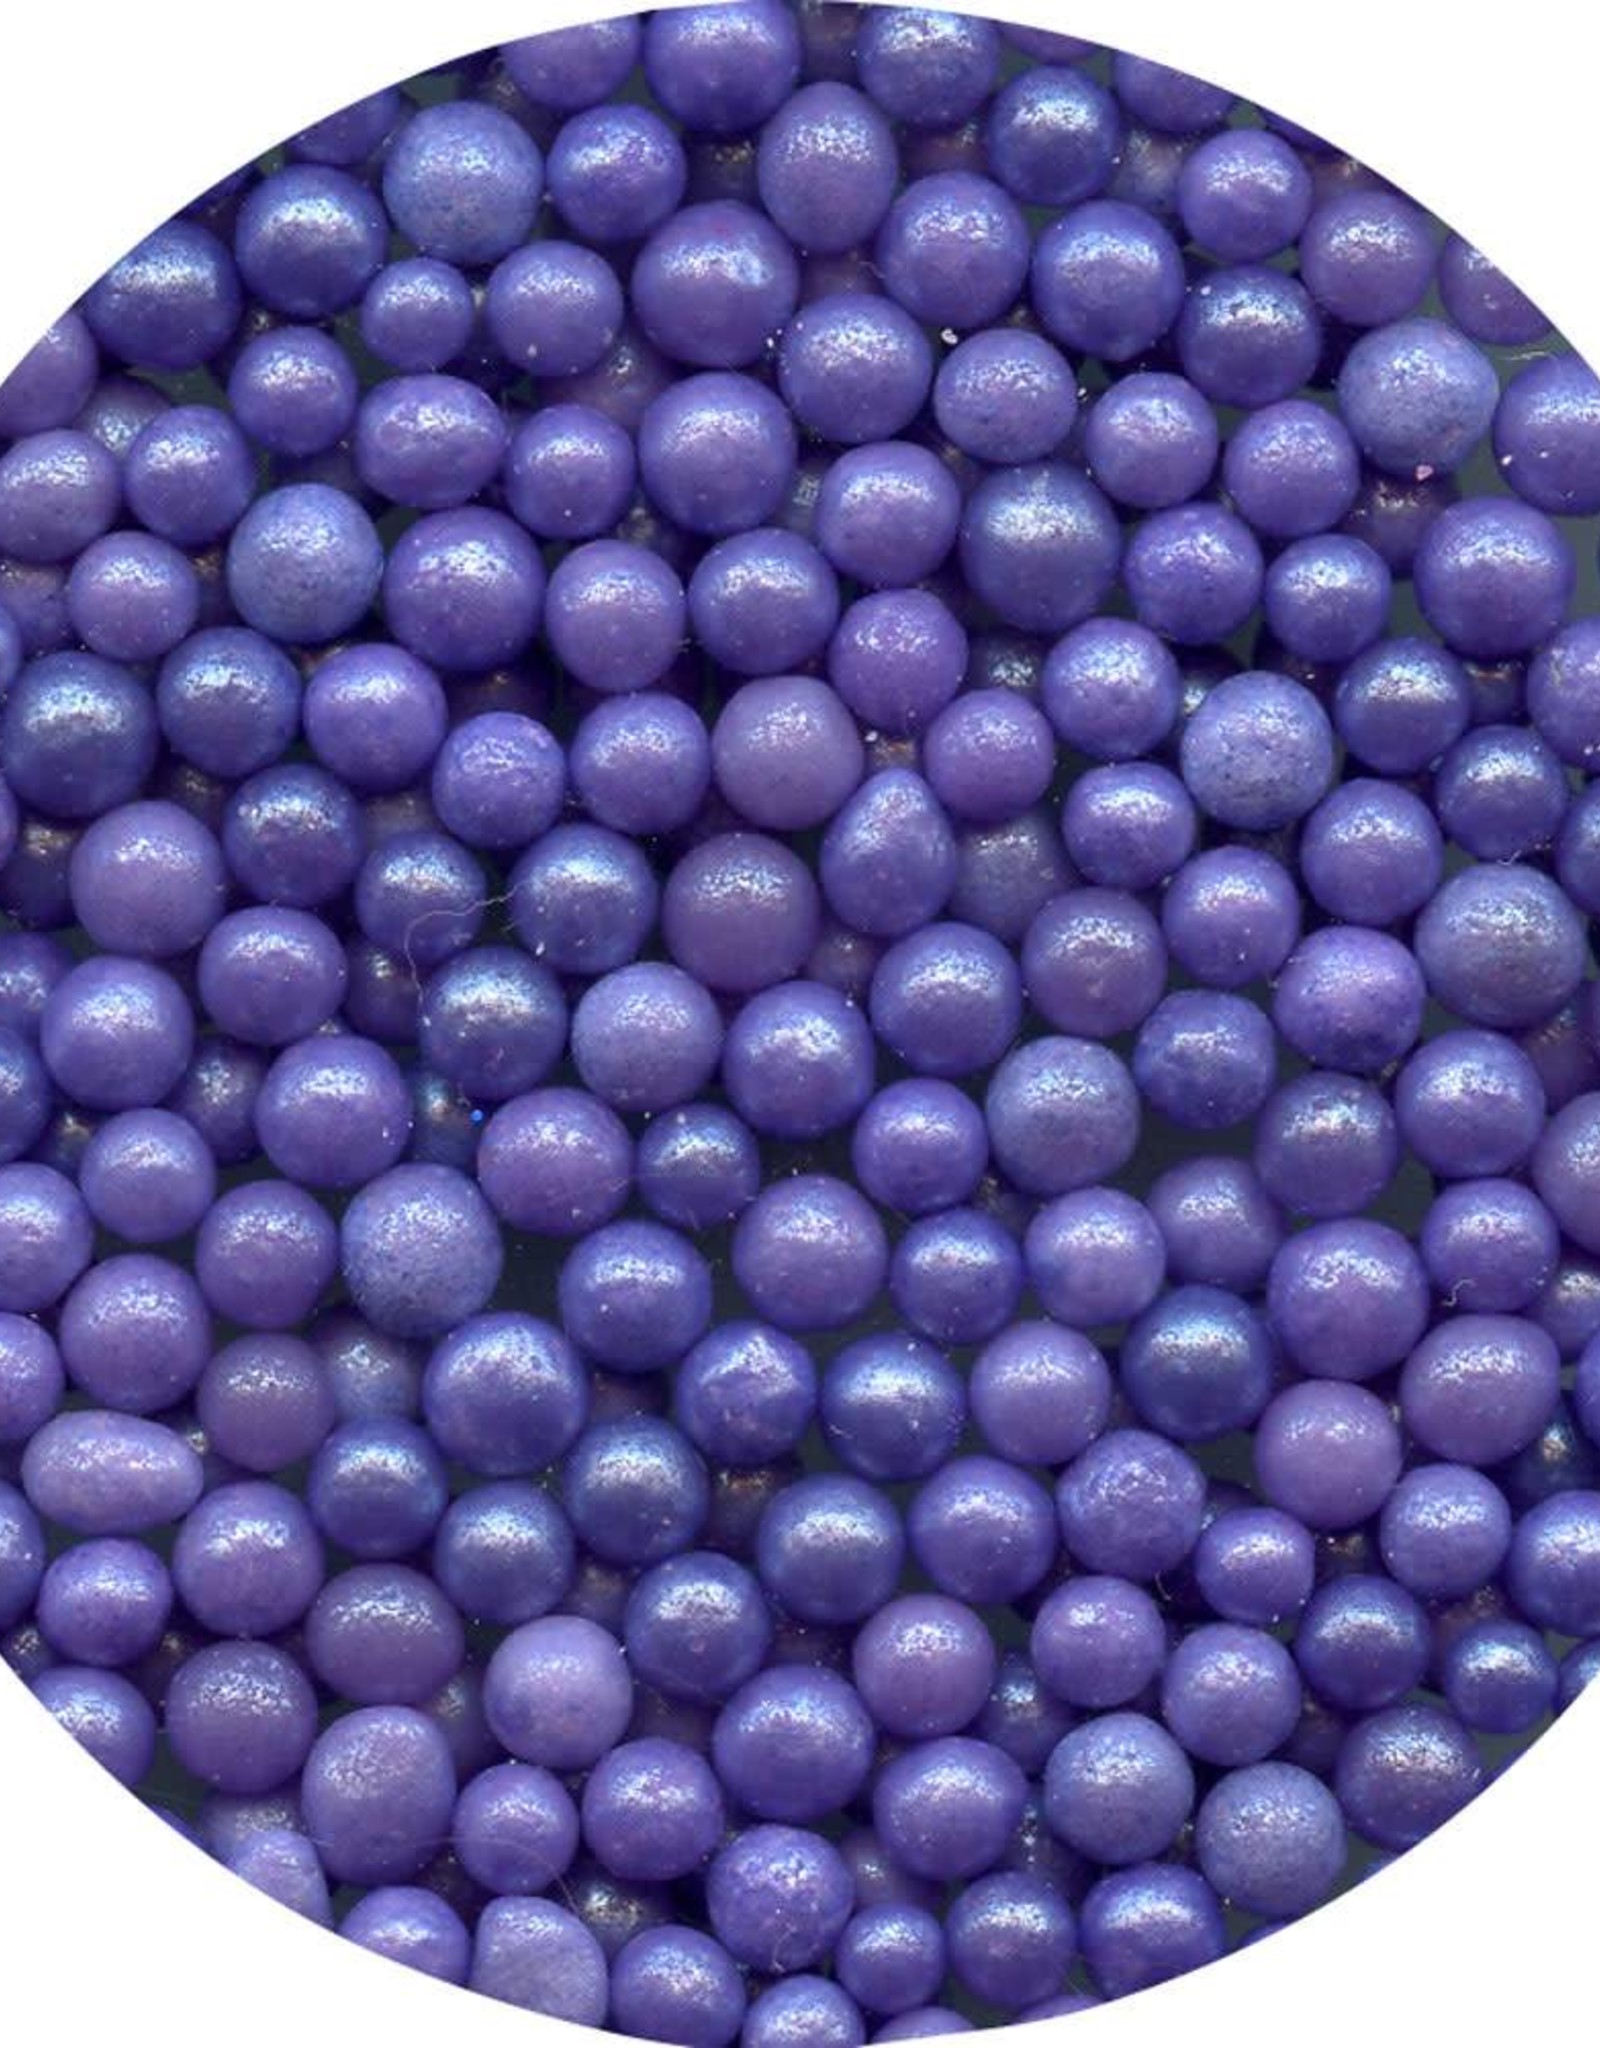 Purple Pearlized Sugar Pearls